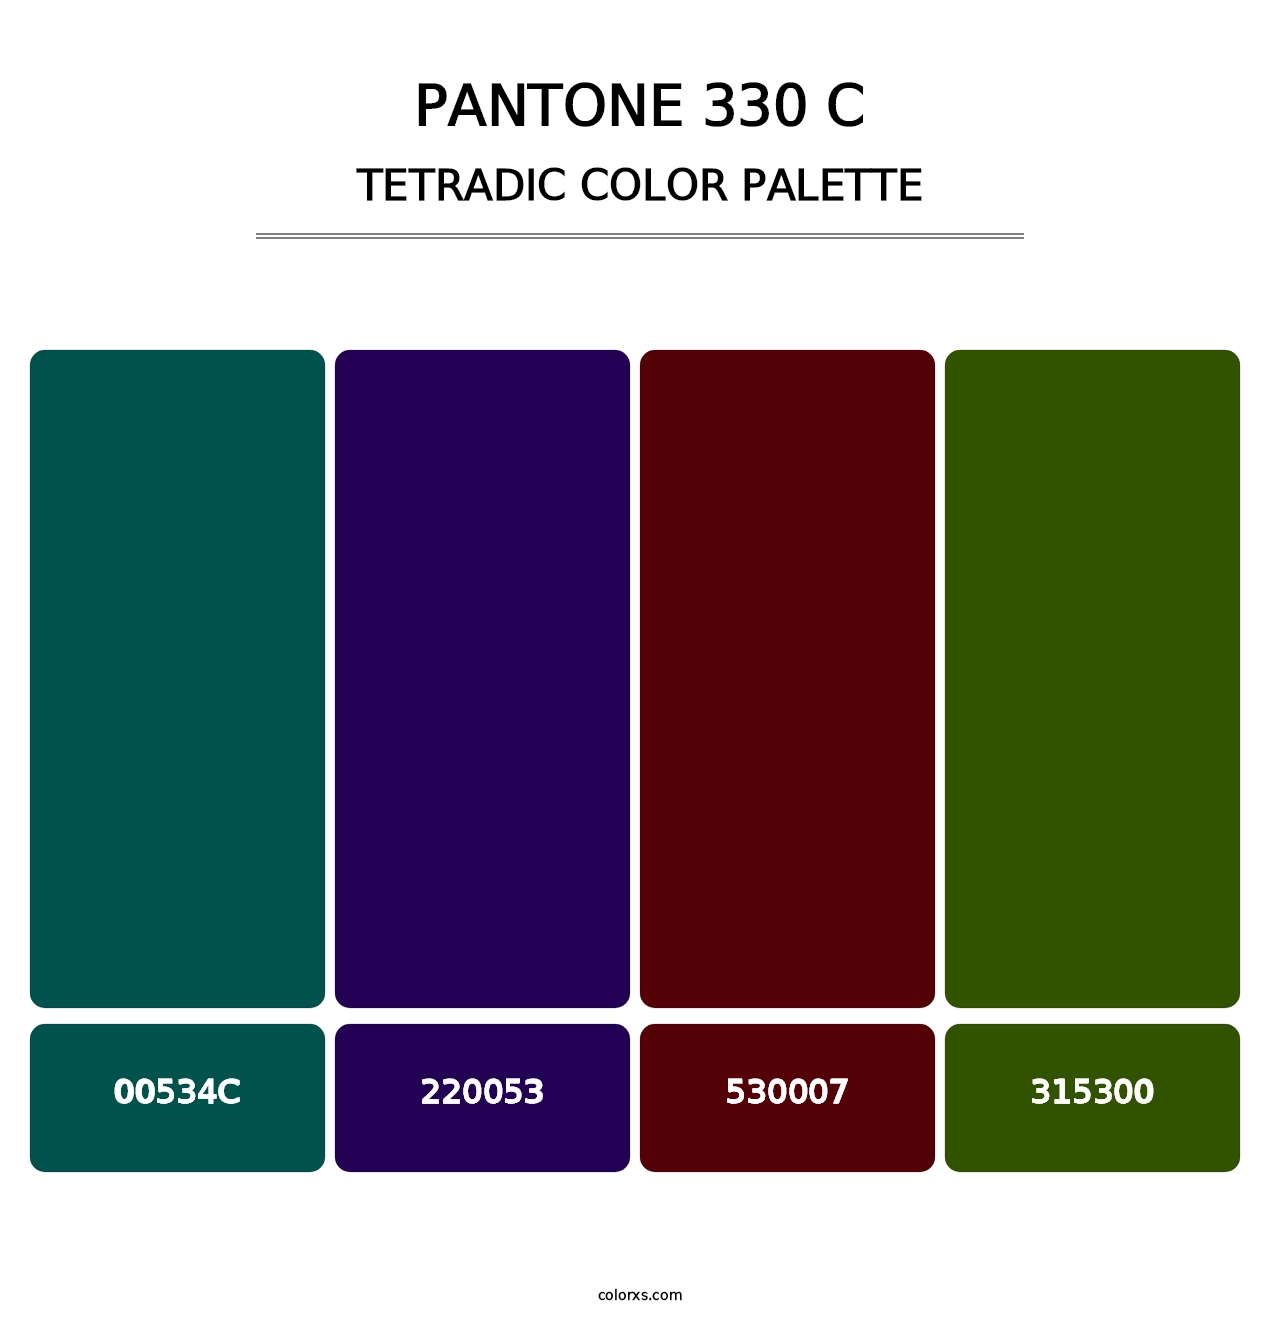 PANTONE 330 C - Tetradic Color Palette